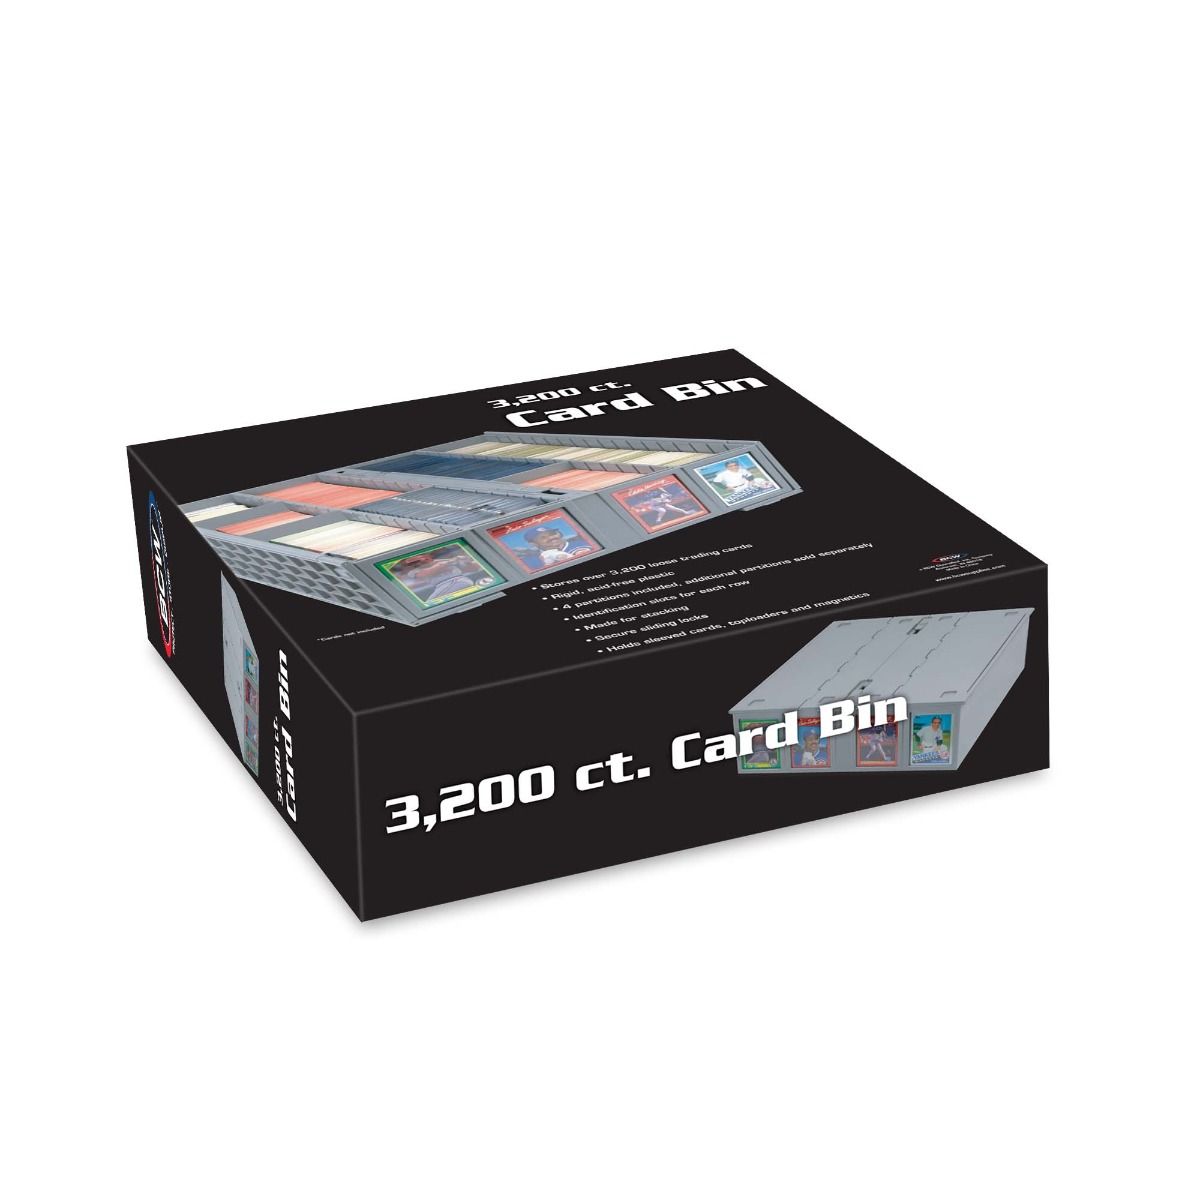 BCW Collectible Card Bin-3200-GRAY-BCW Supplies-Ace Cards &amp; Collectibles